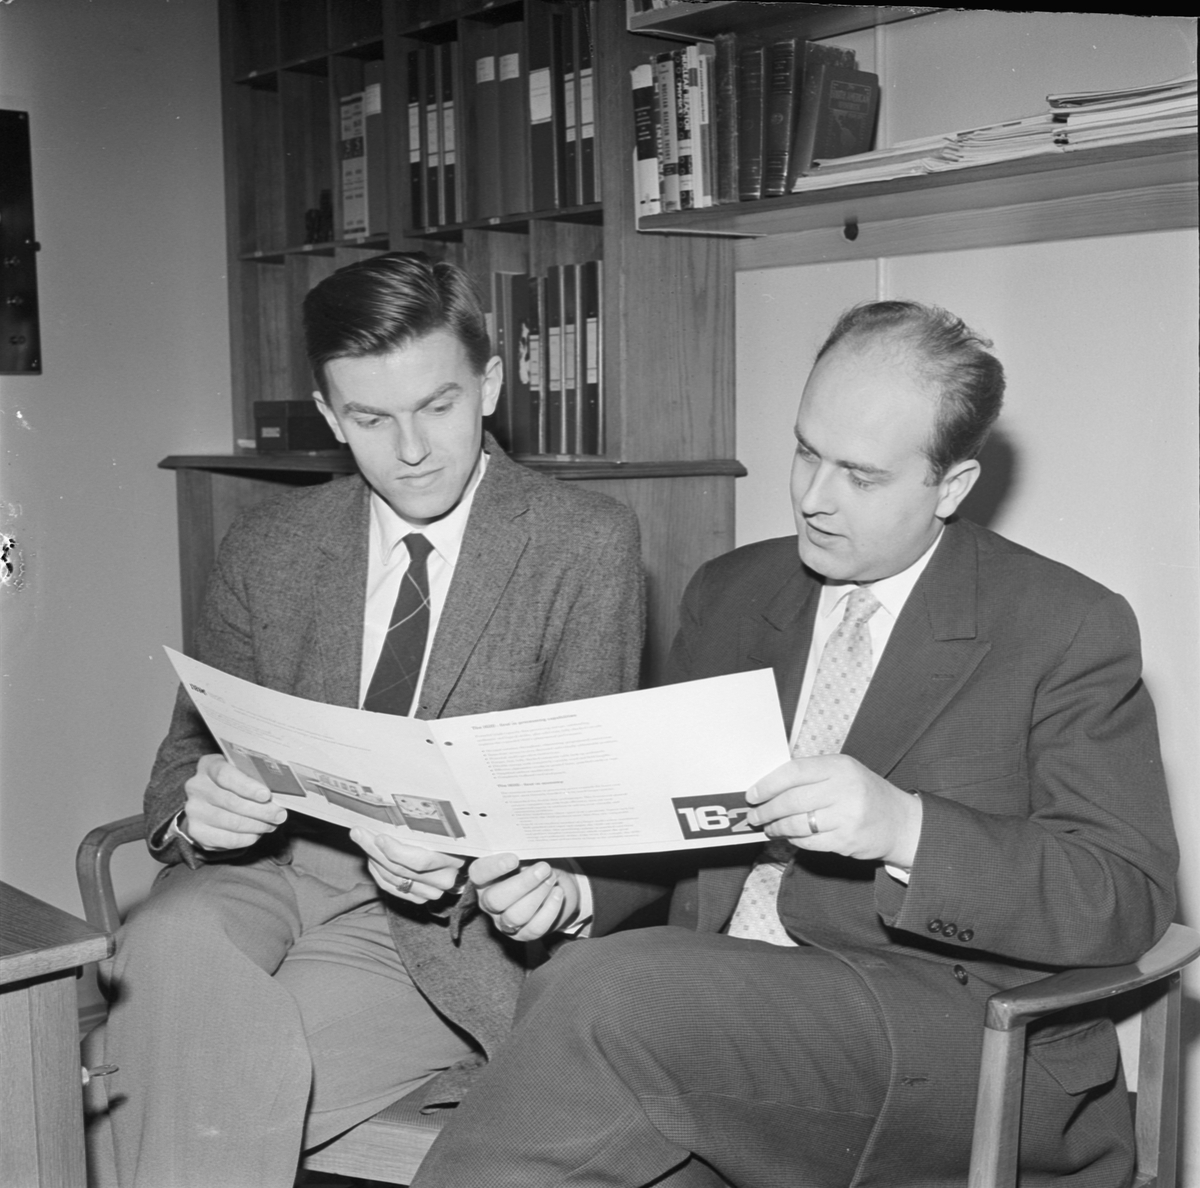 Universitetet, ny matematikmaskin, docent Lindgren och Werner Schneider studerar broschyren, Uppsala 1960